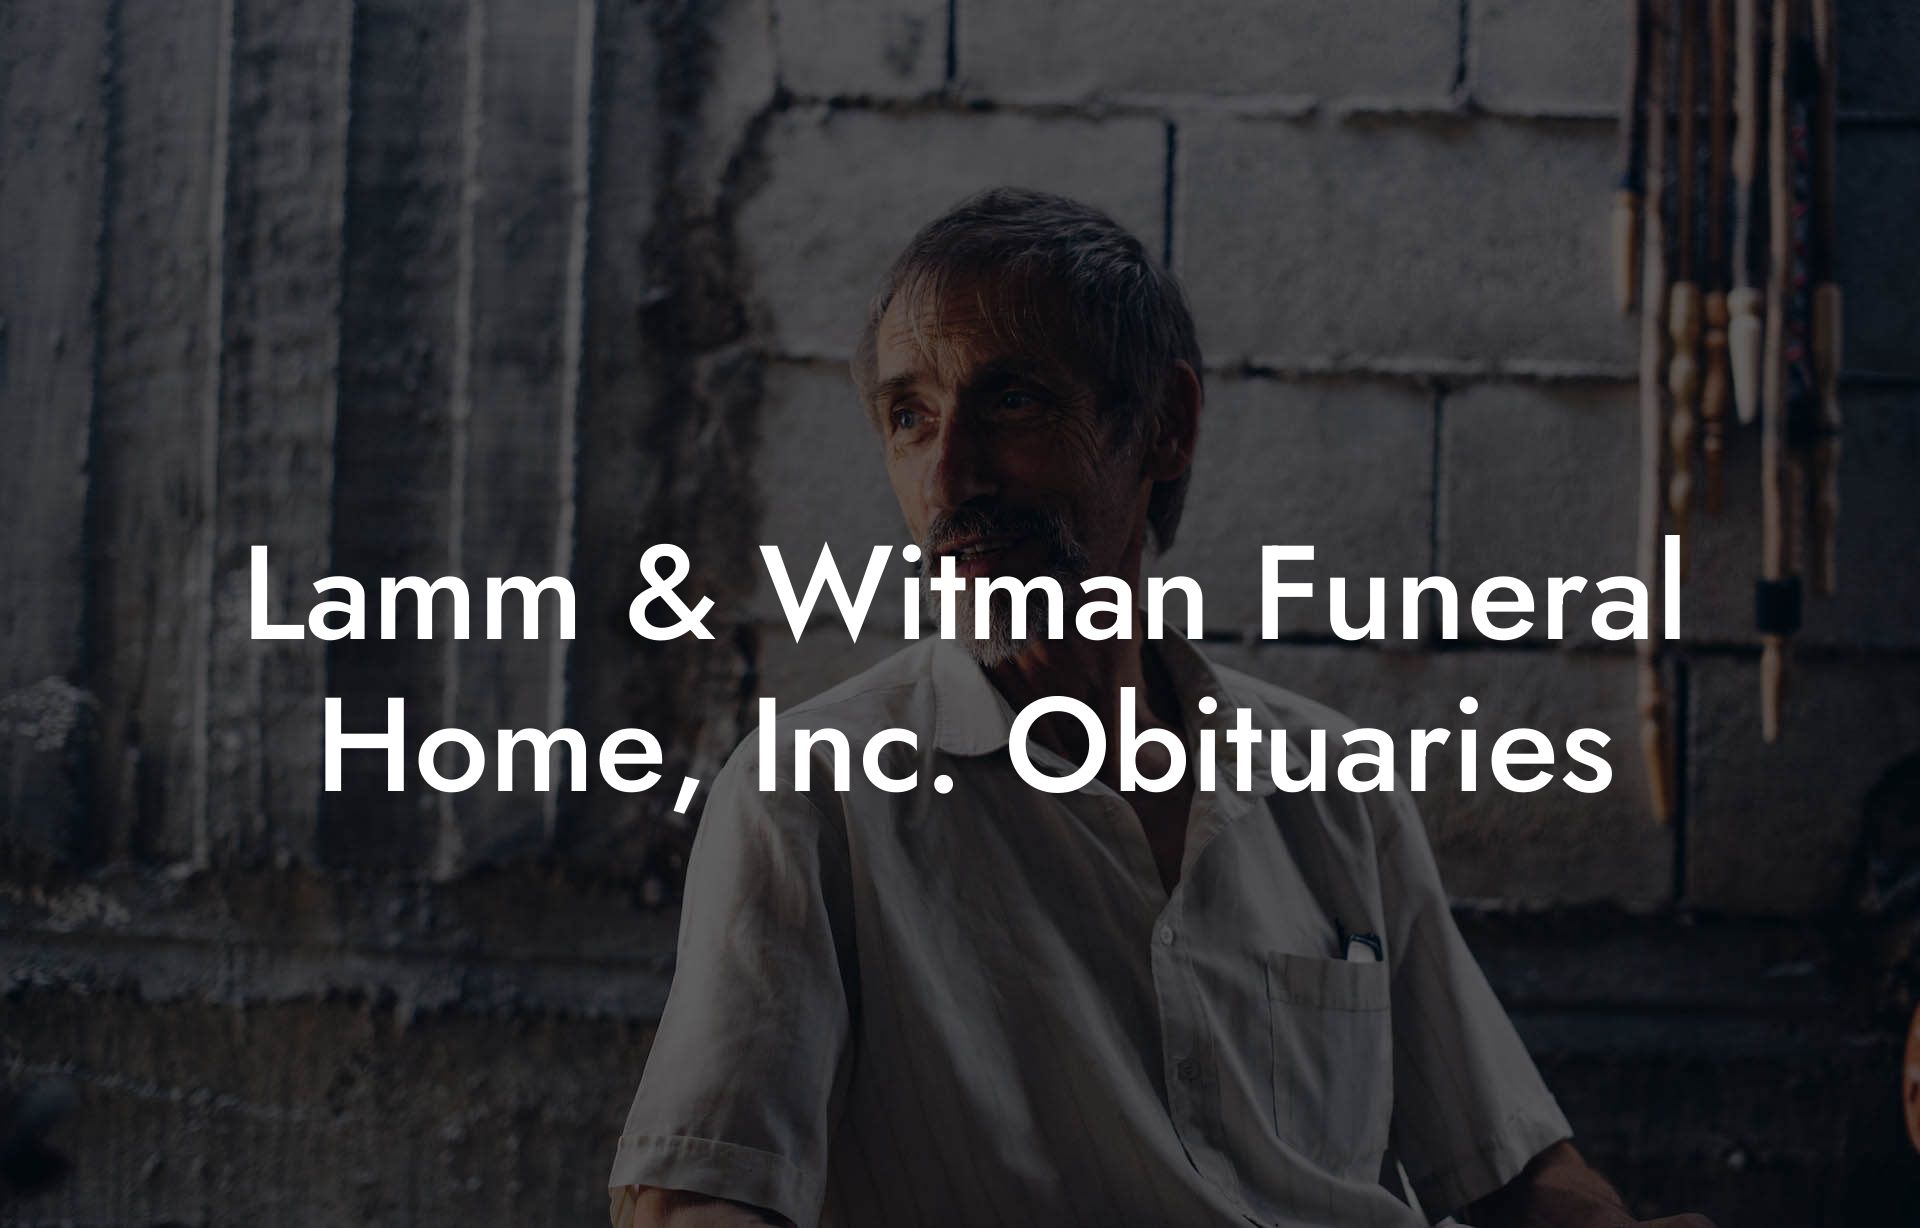 Lamm & Witman Funeral Home, Inc. Obituaries